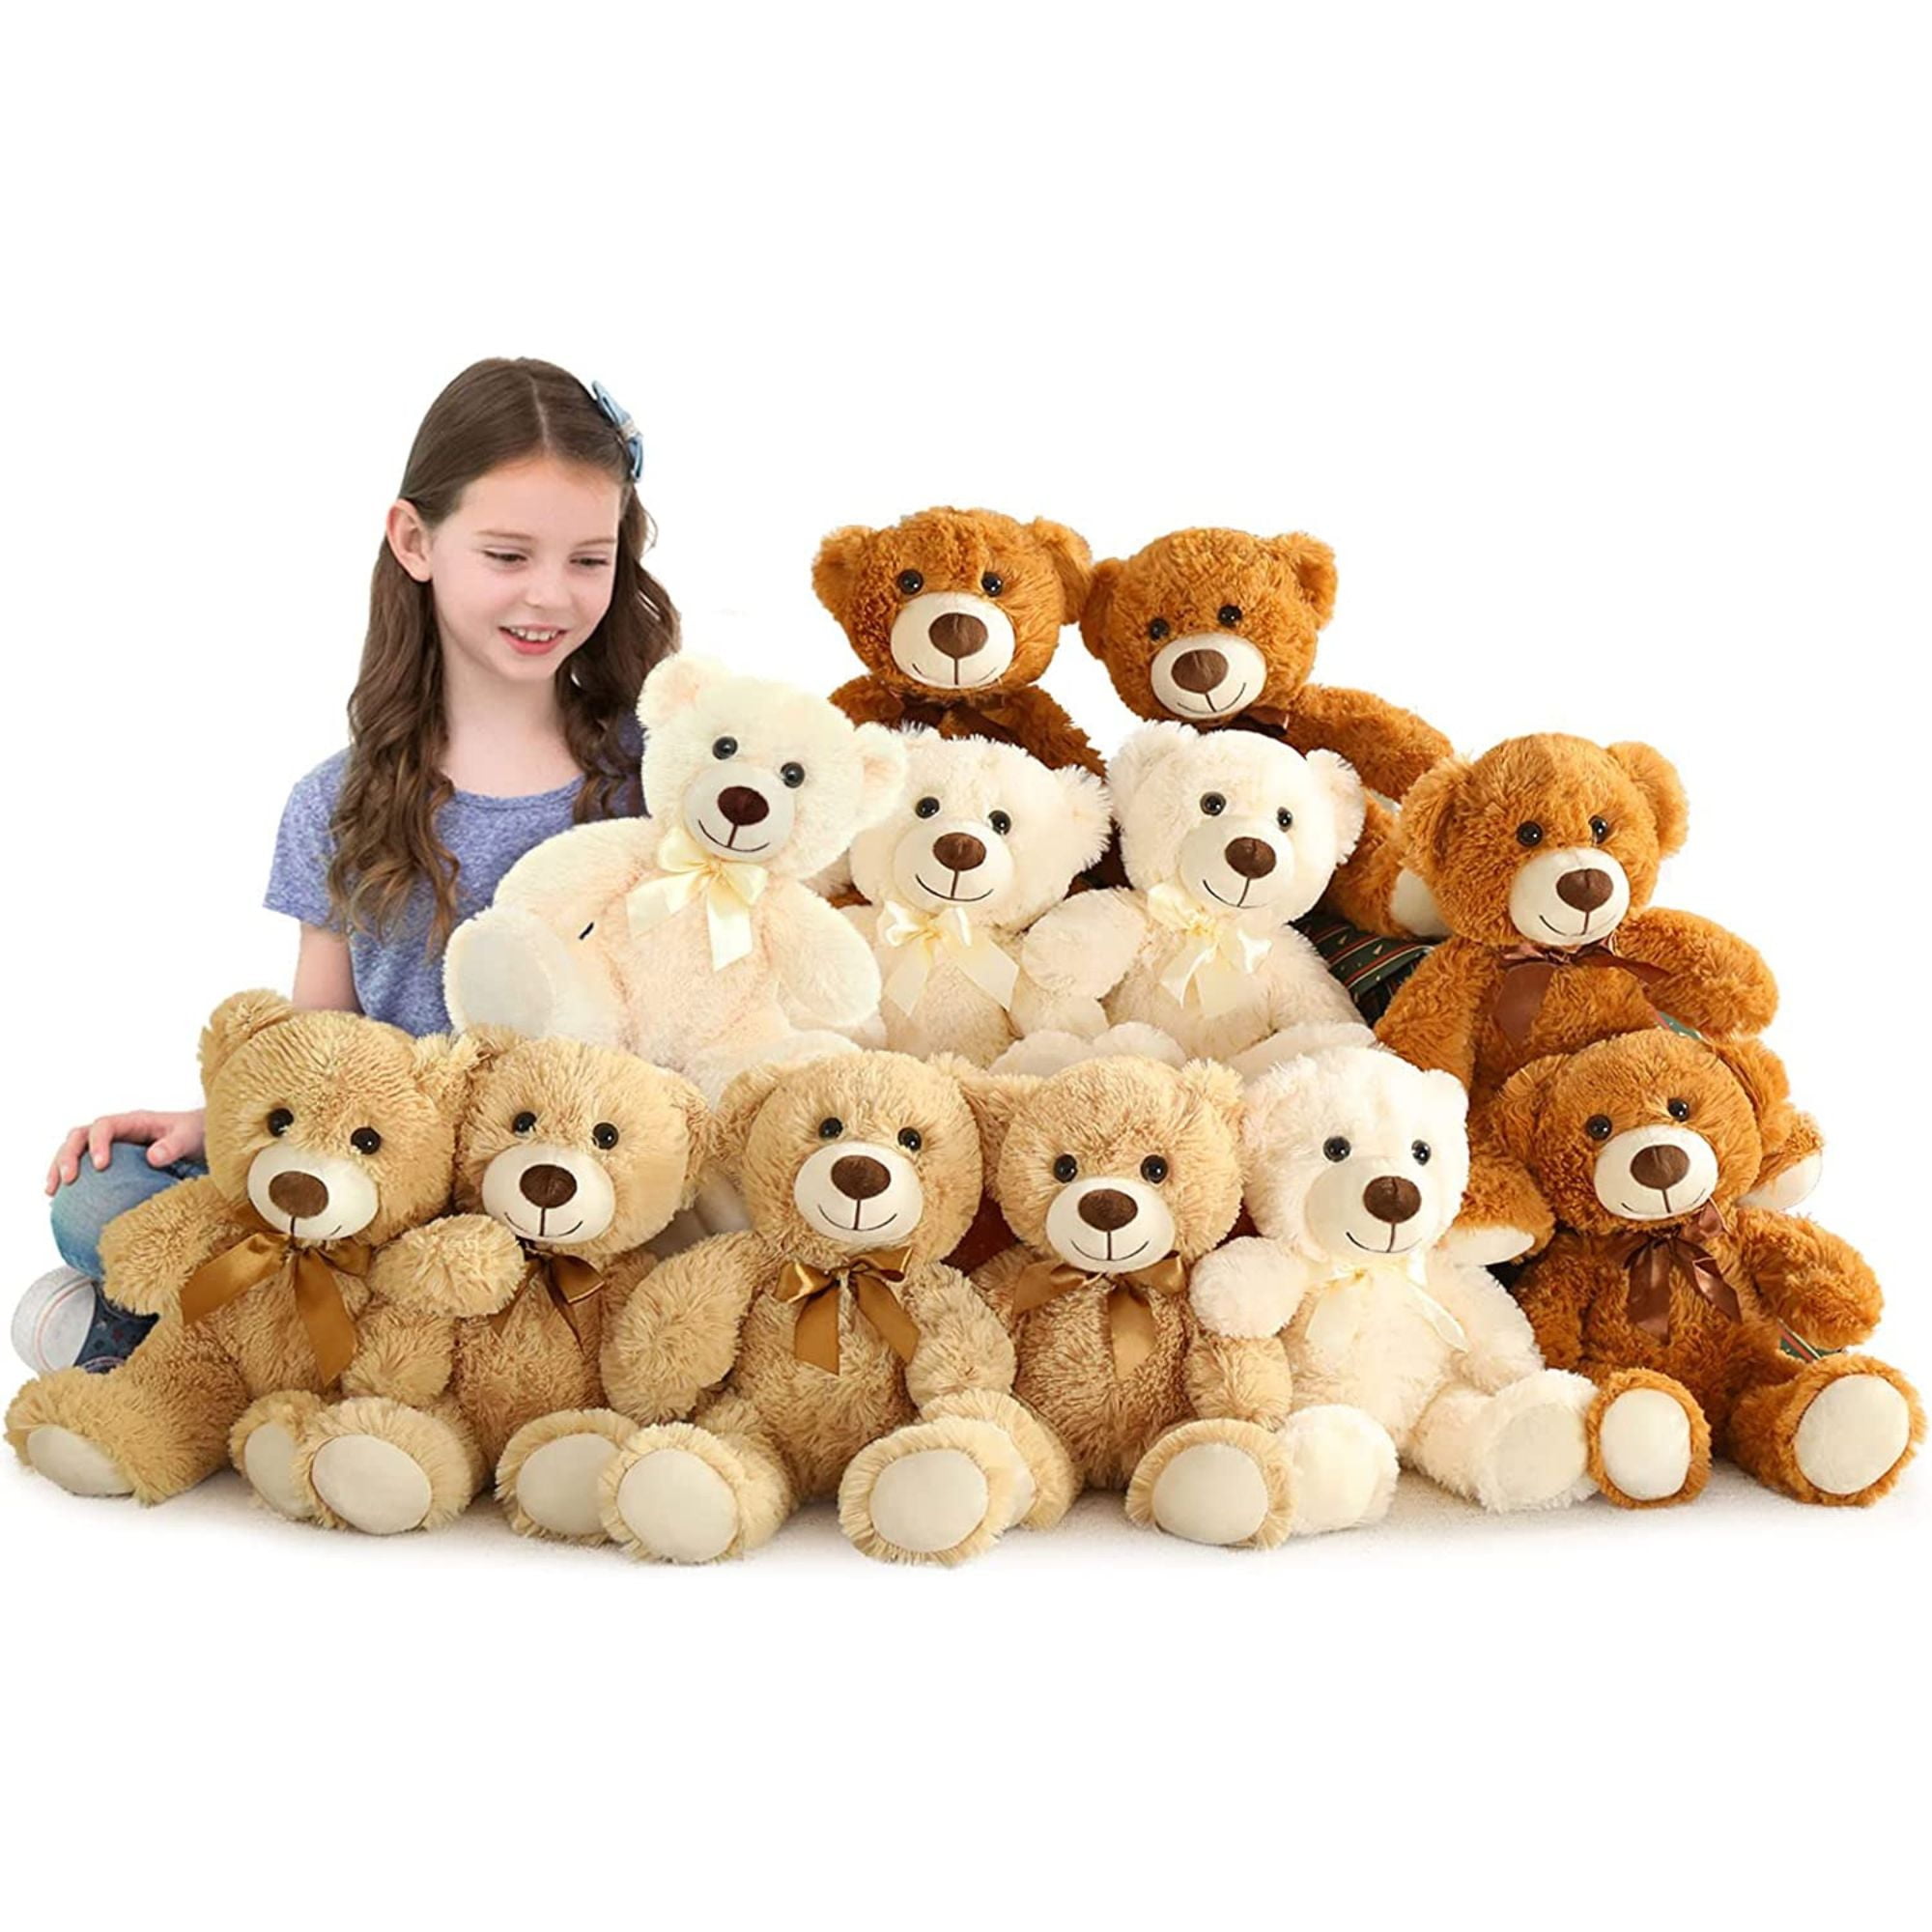 Wholesale Teddy Bears - Sewn Eye Hug Bear